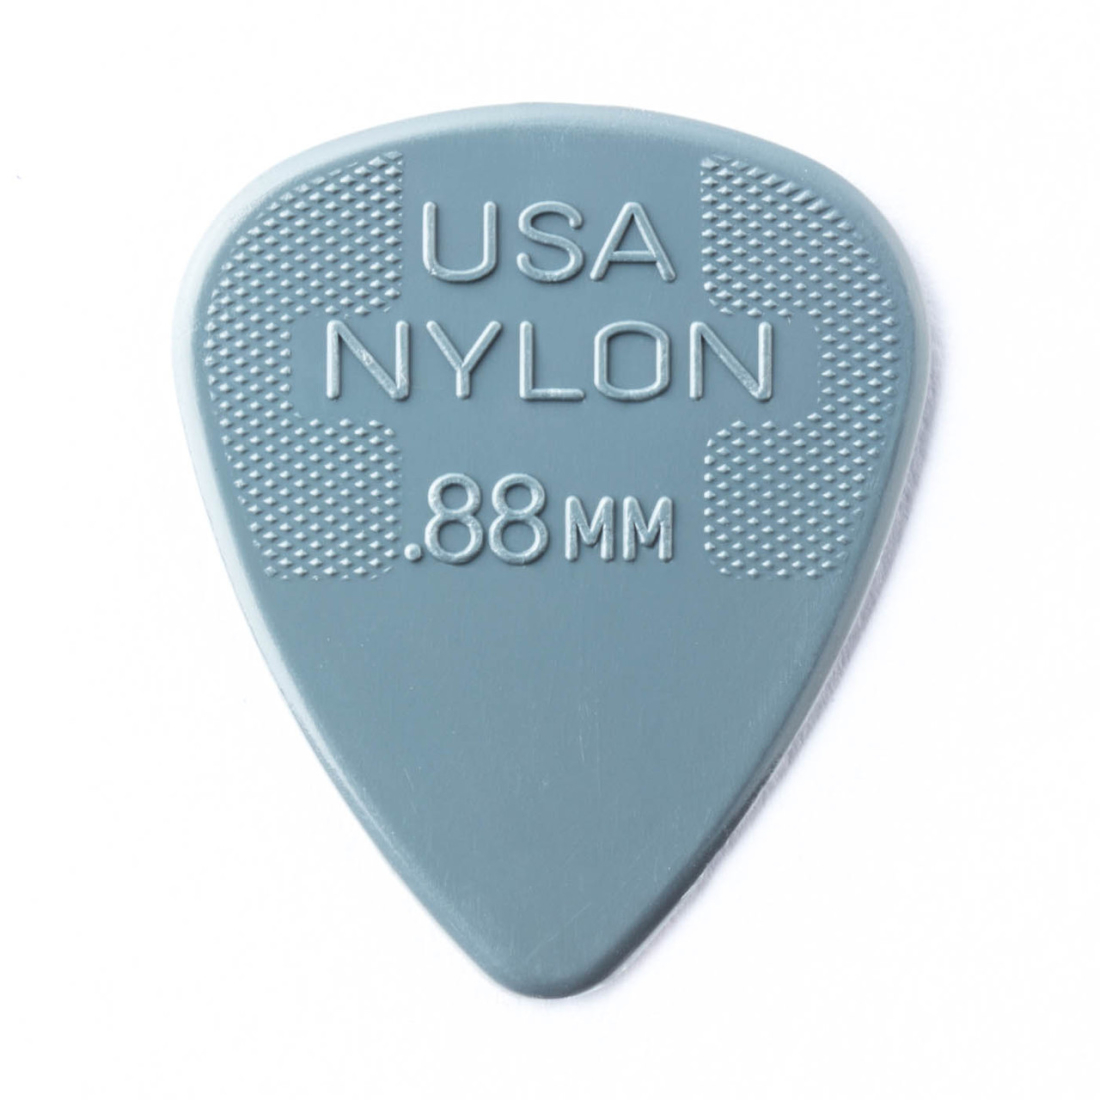 Nylon Standard Player Pack (12 Pack) - .88mm